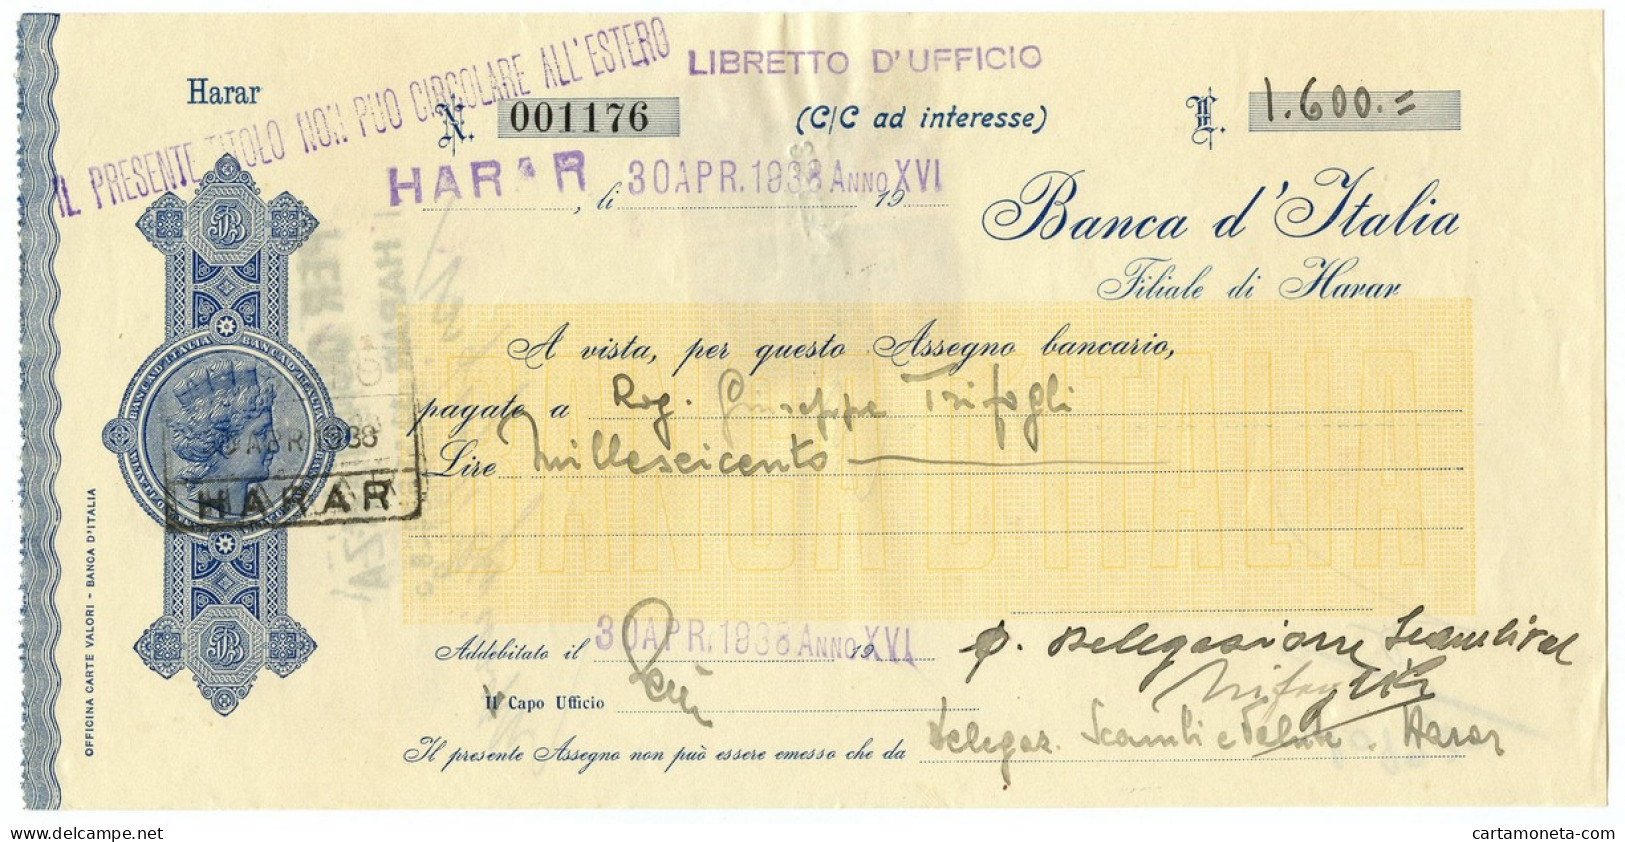 1600 LIRE ASSEGNO C/C AD INTERESSE BANCA D'ITALIA FILIALE HARAR 30/04/1938 SUP - Italiaans Oost-Afrika